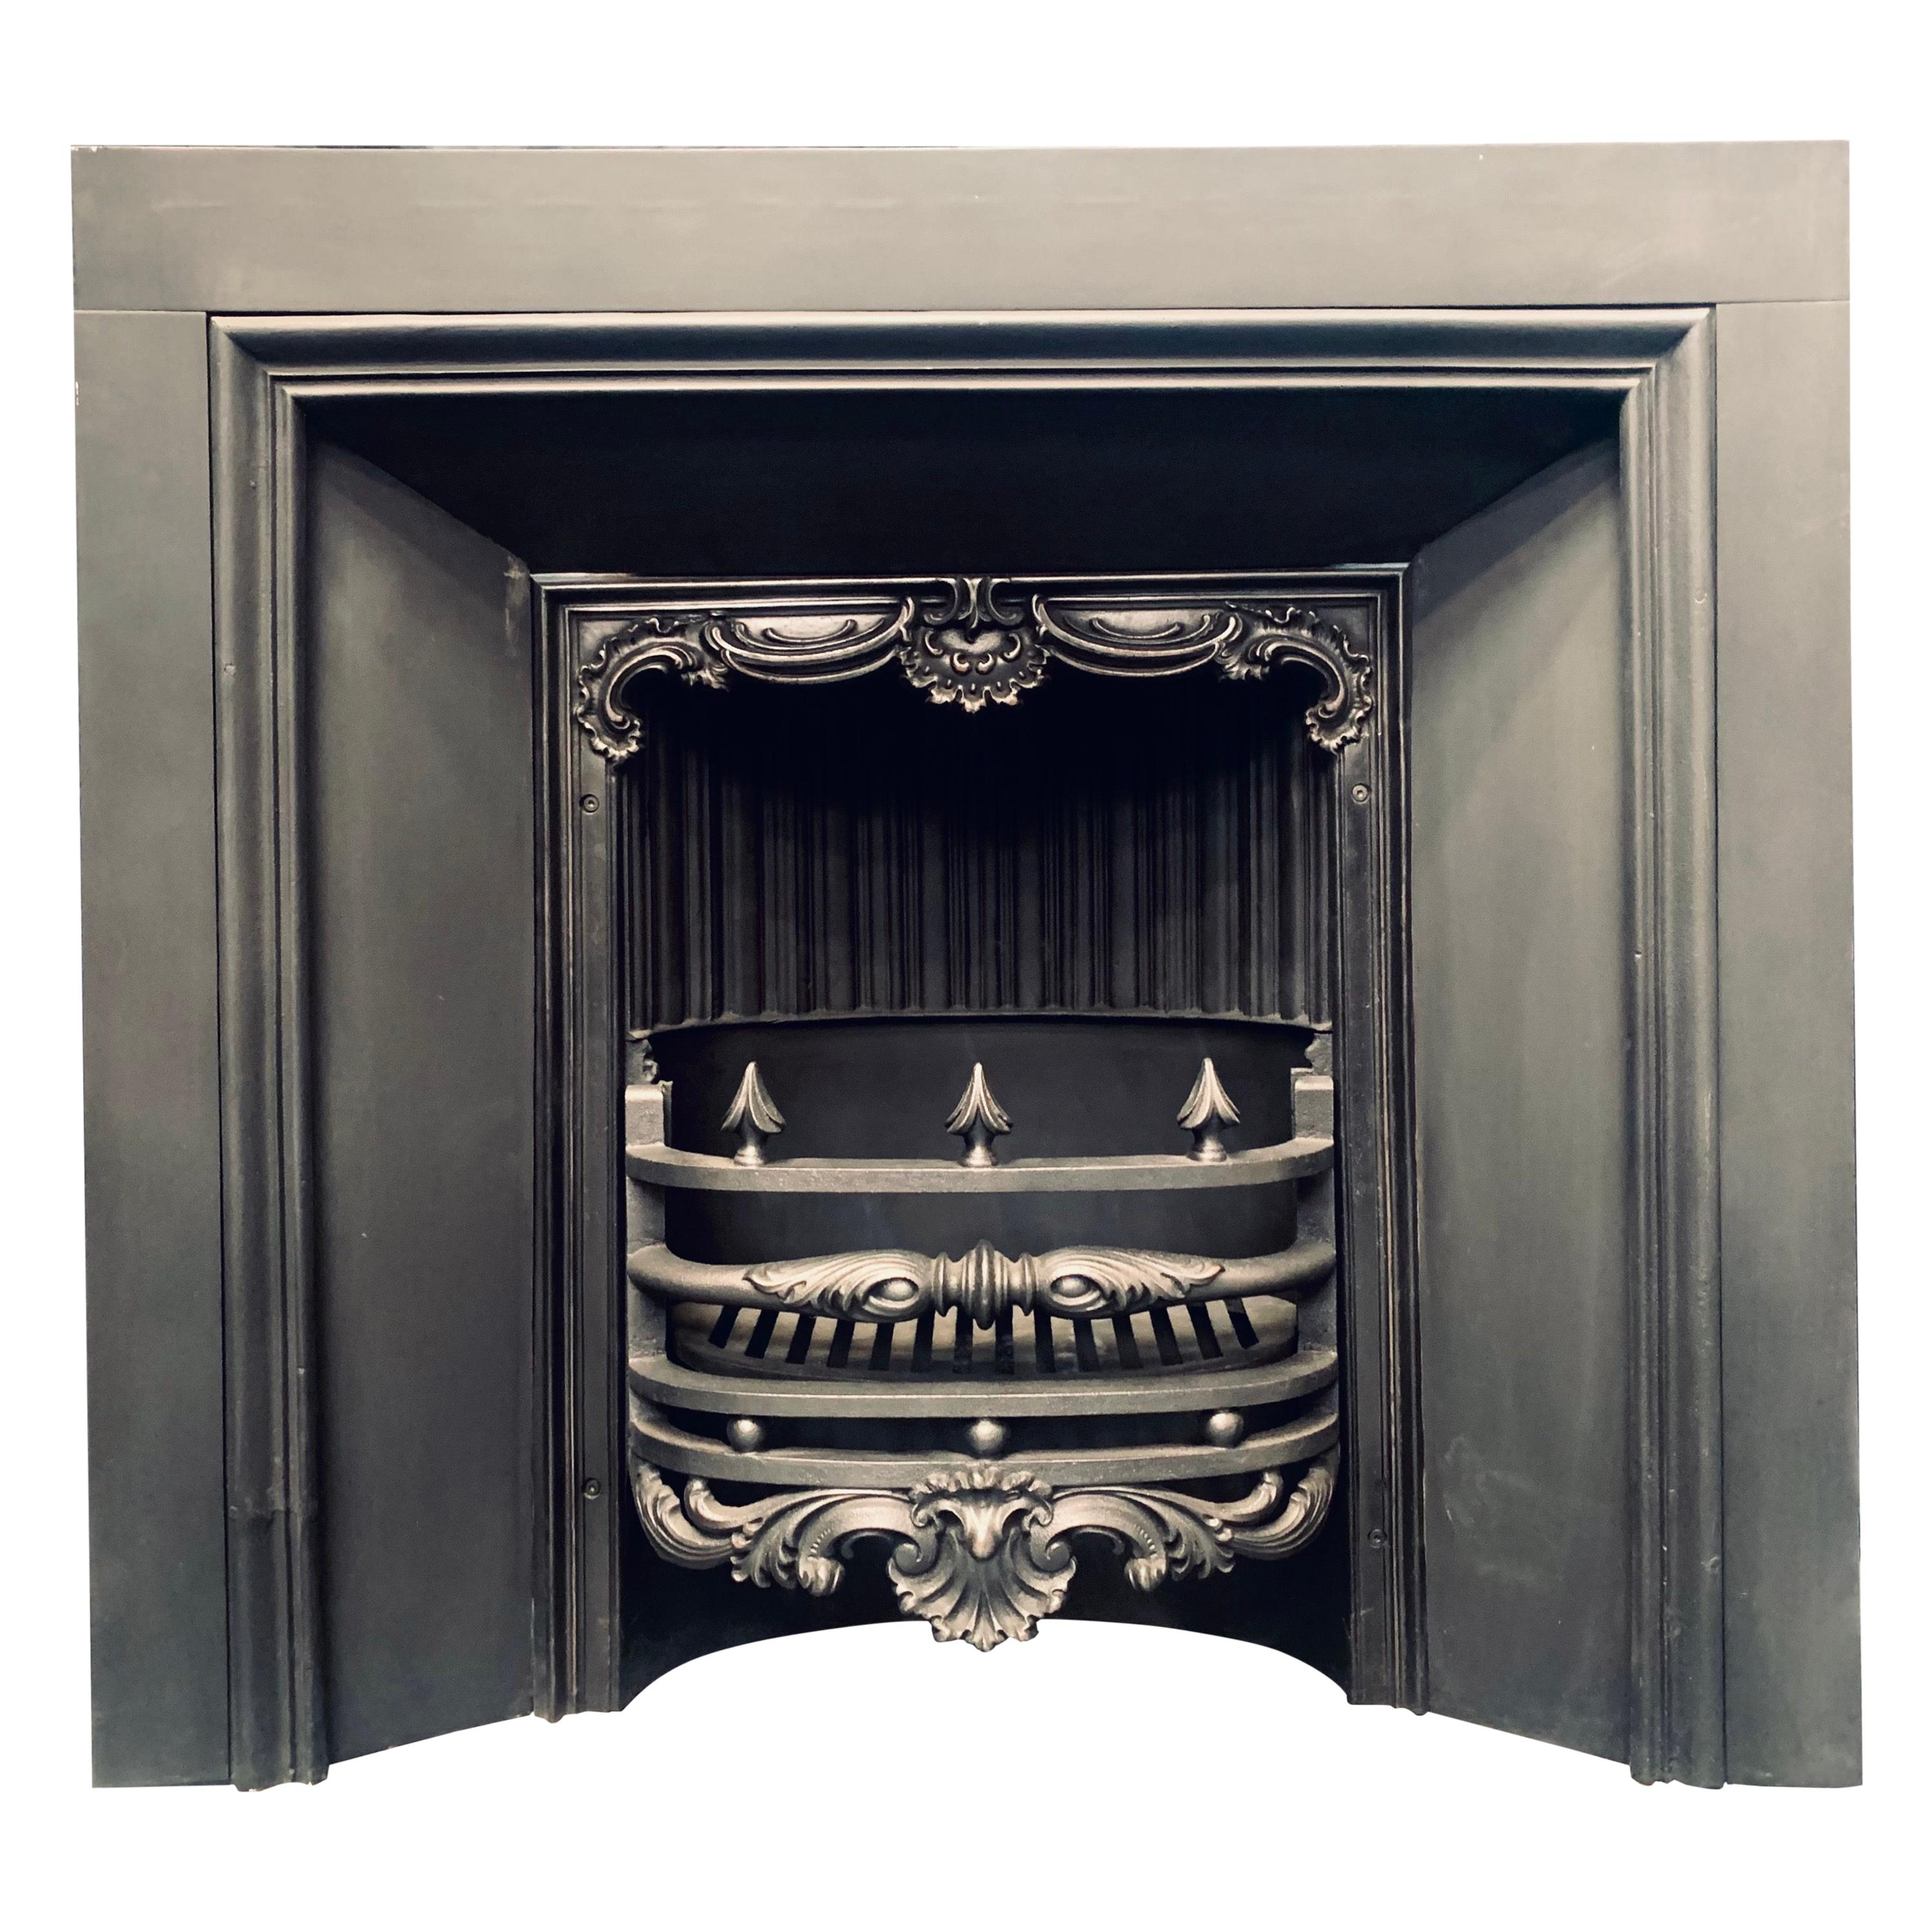 Early Victorian 19th Century Scottish Cast Iron Fireplace Insert